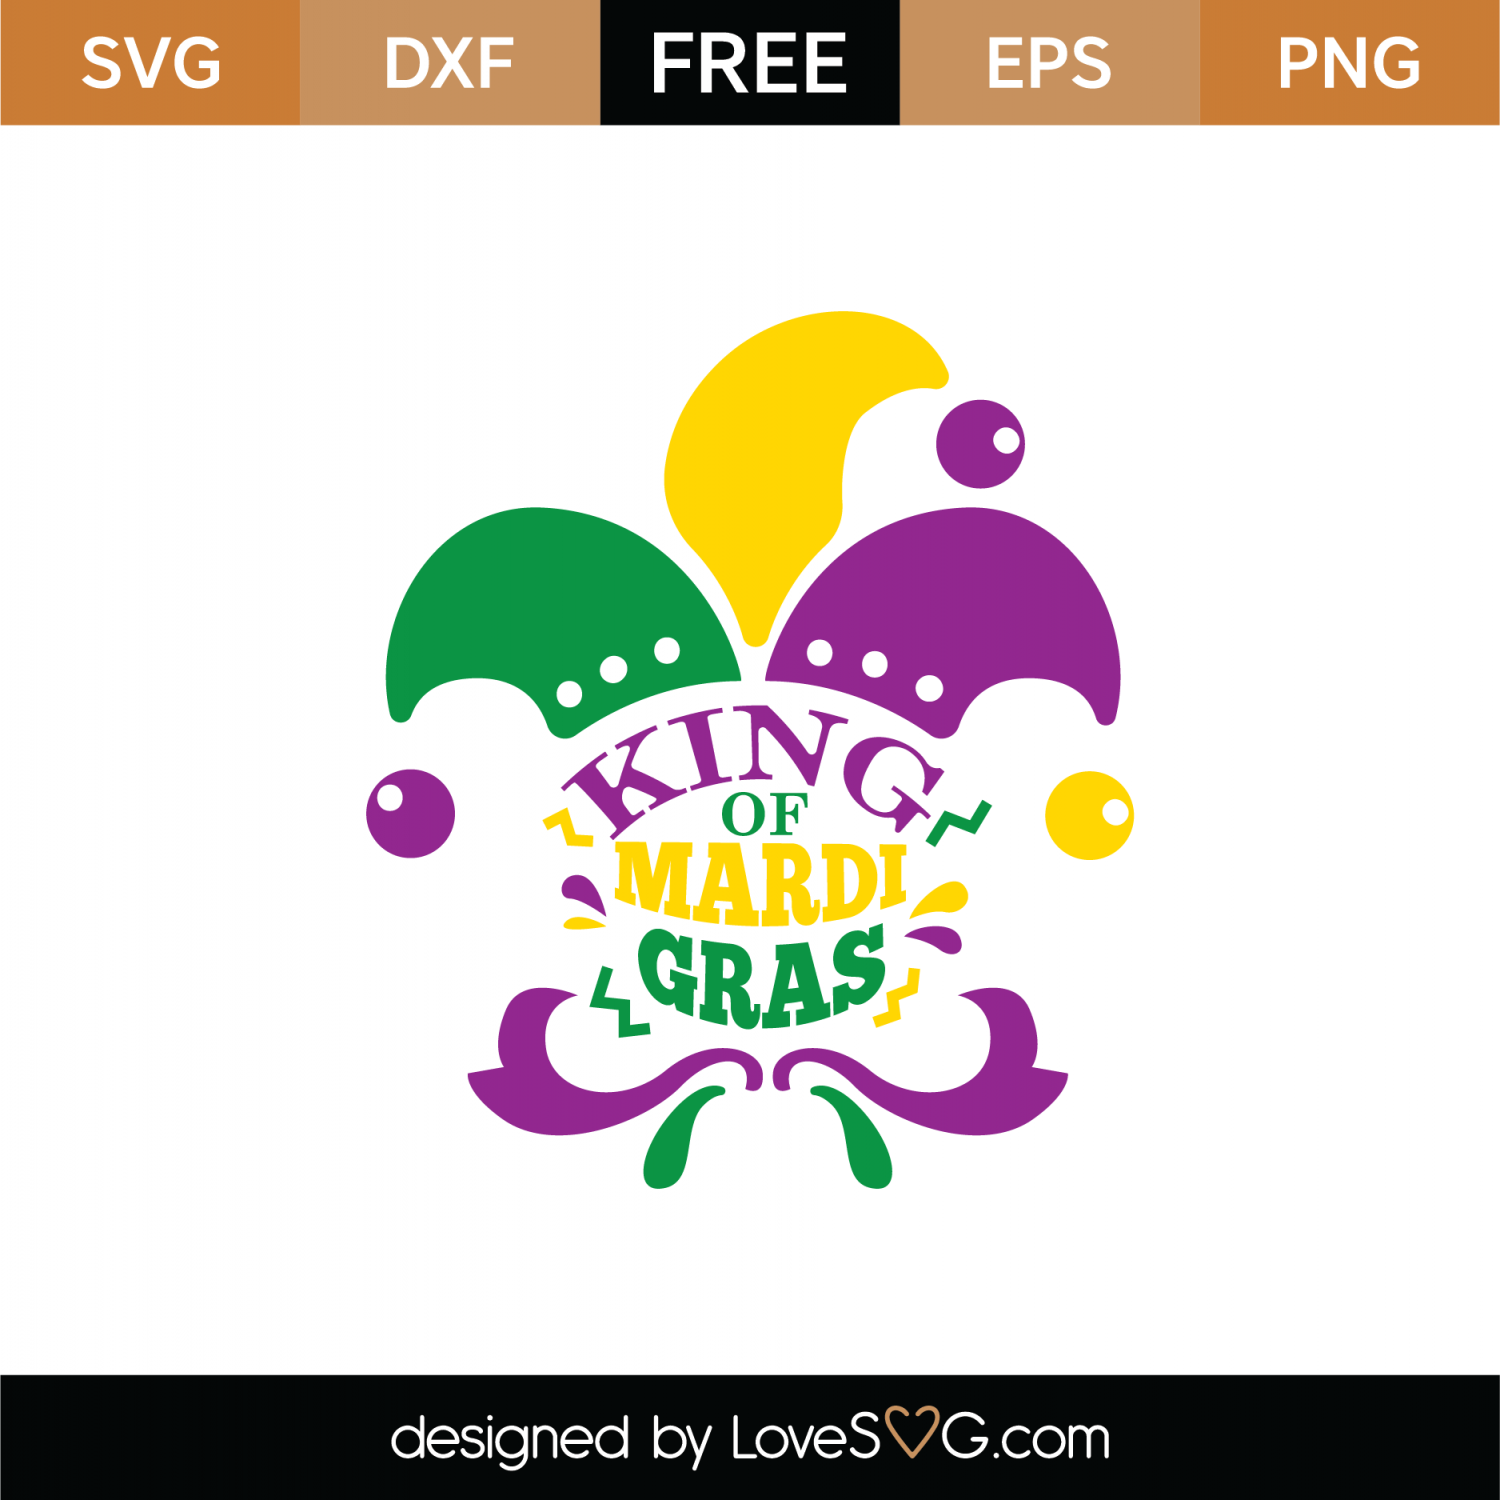 Free King of Mardi Gras SVG Cut File | Lovesvg.com